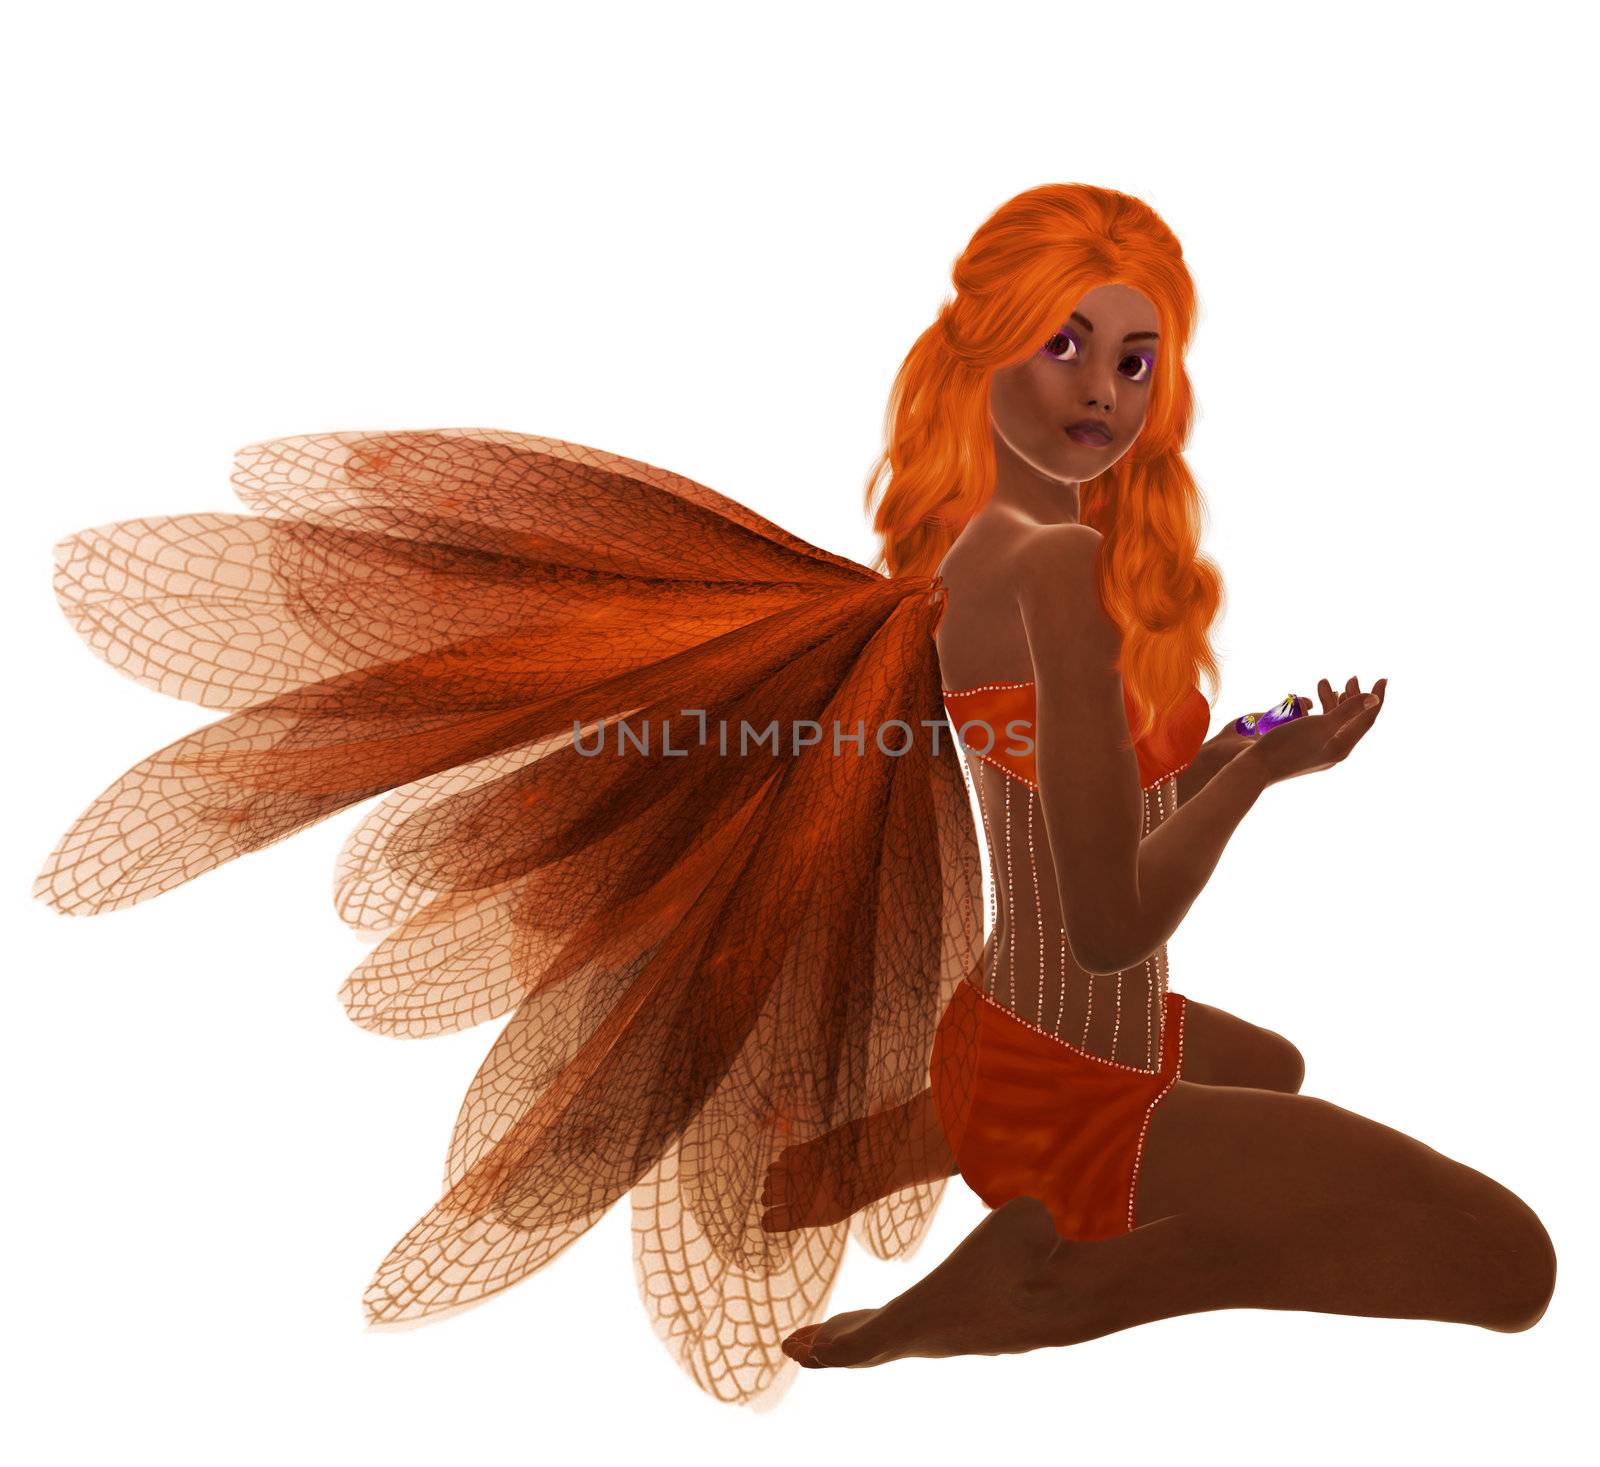 Orange fairy with orange hair, sitting holding flowers in her hand